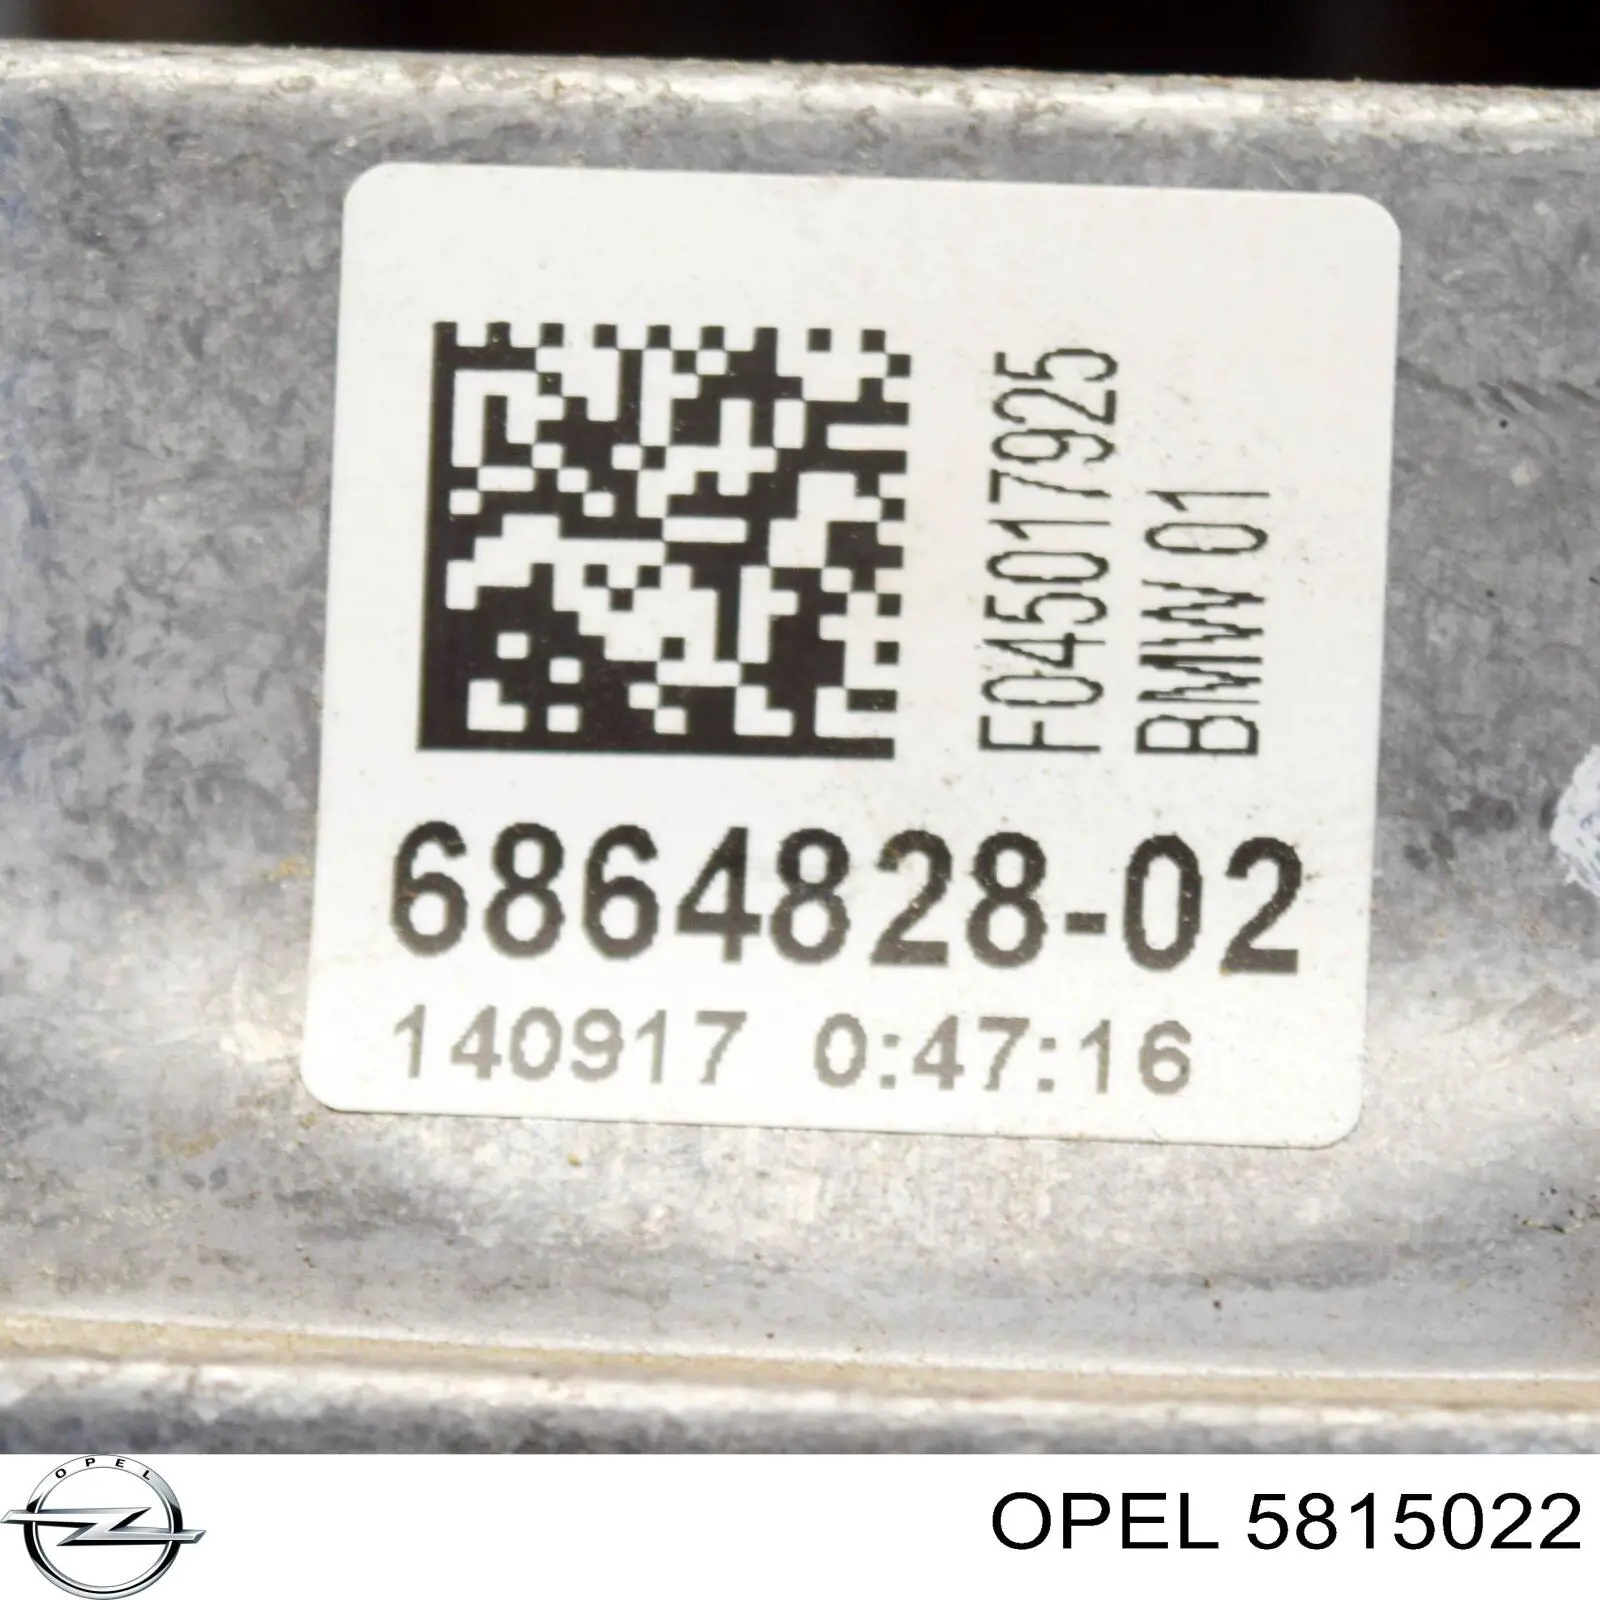 5815061 Opel бензонасос